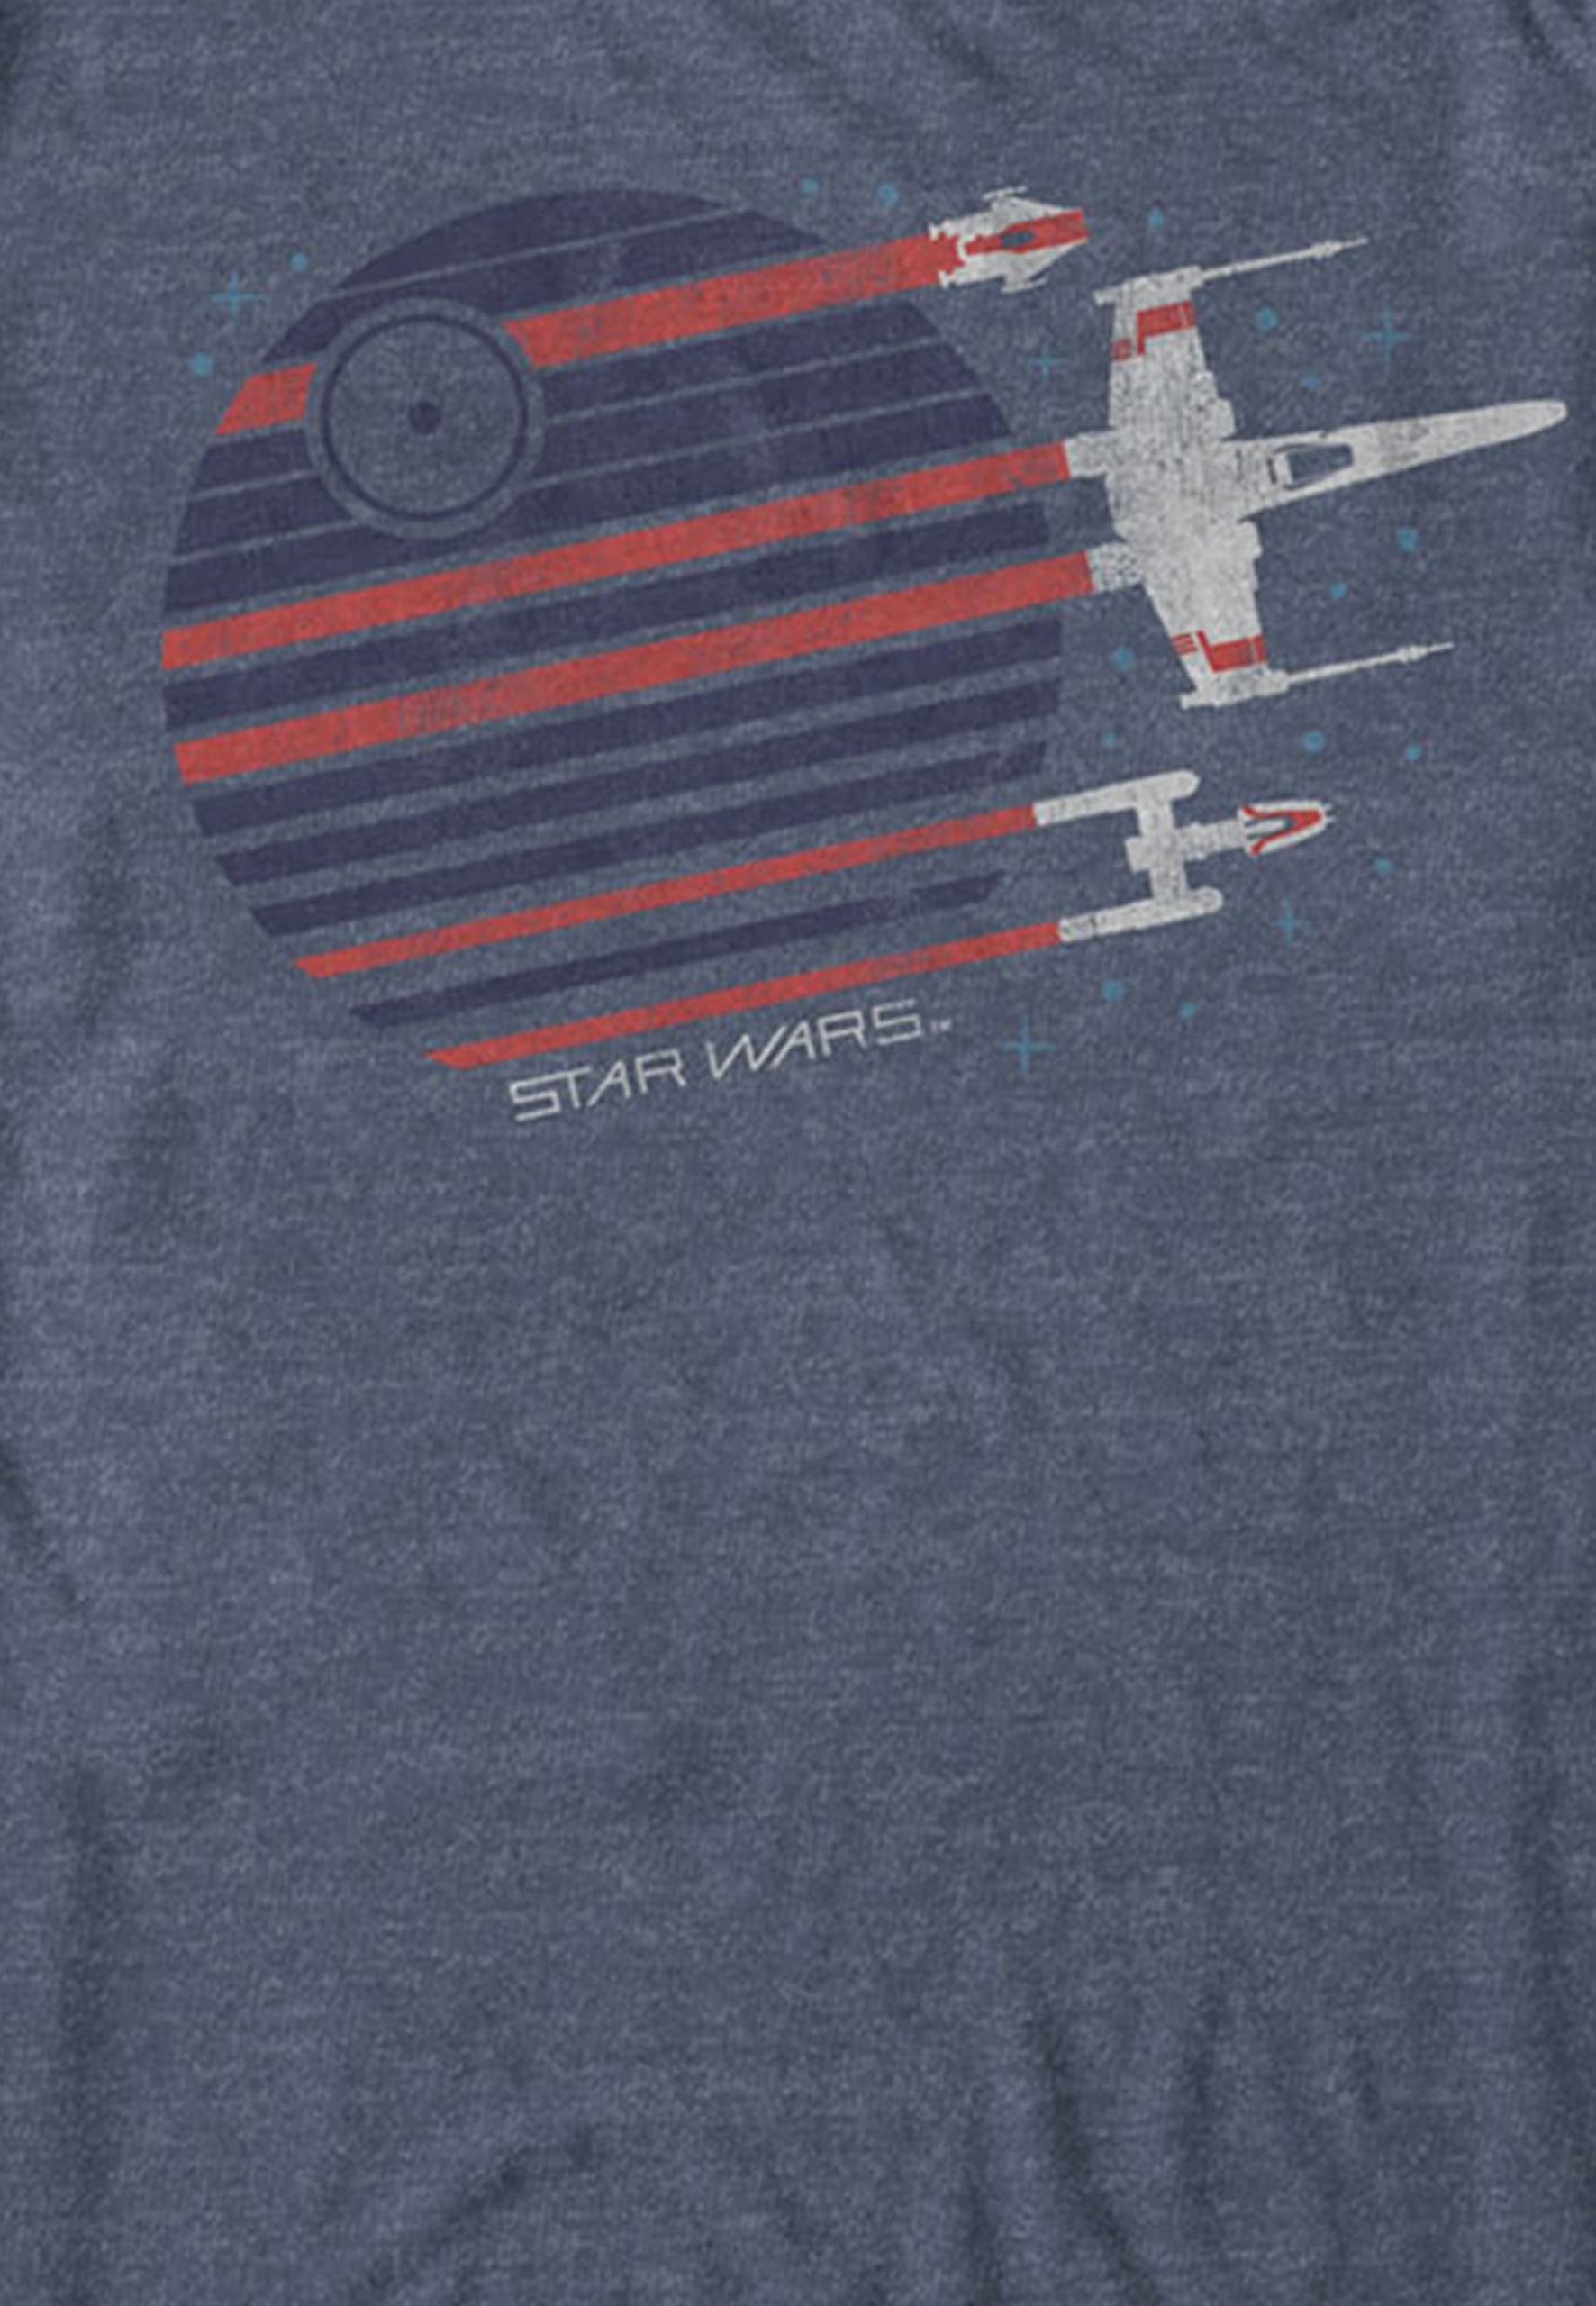 STAR WARS Men's Rebel Flyby T-Shirt